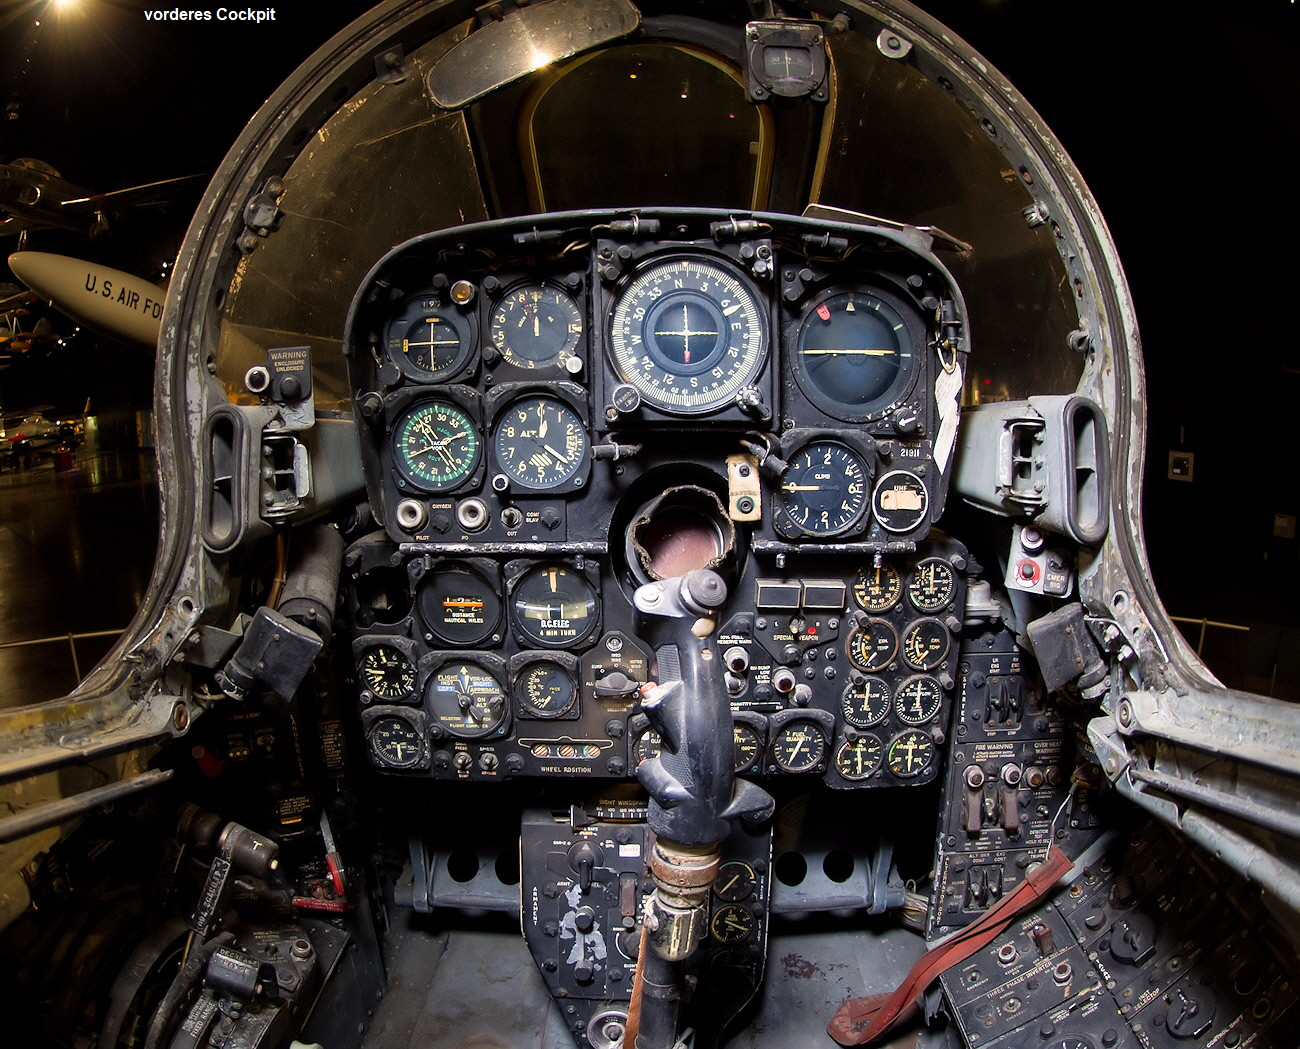 Northrop F-89J Scorpion - vorderes Cockpit